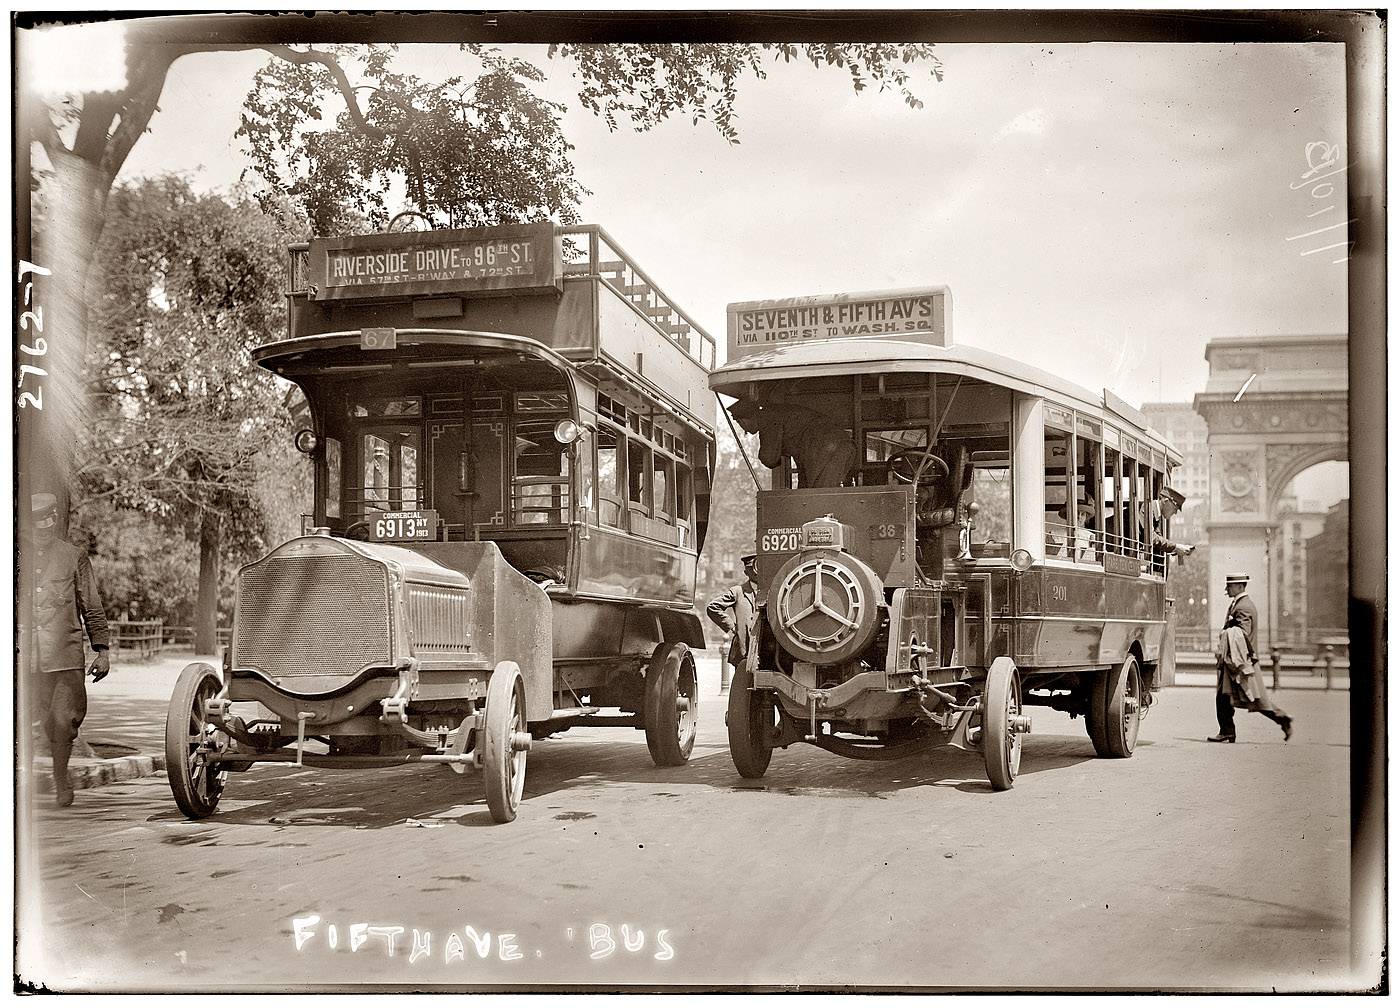 1913, New York. Fifth Avenue Omnibuses